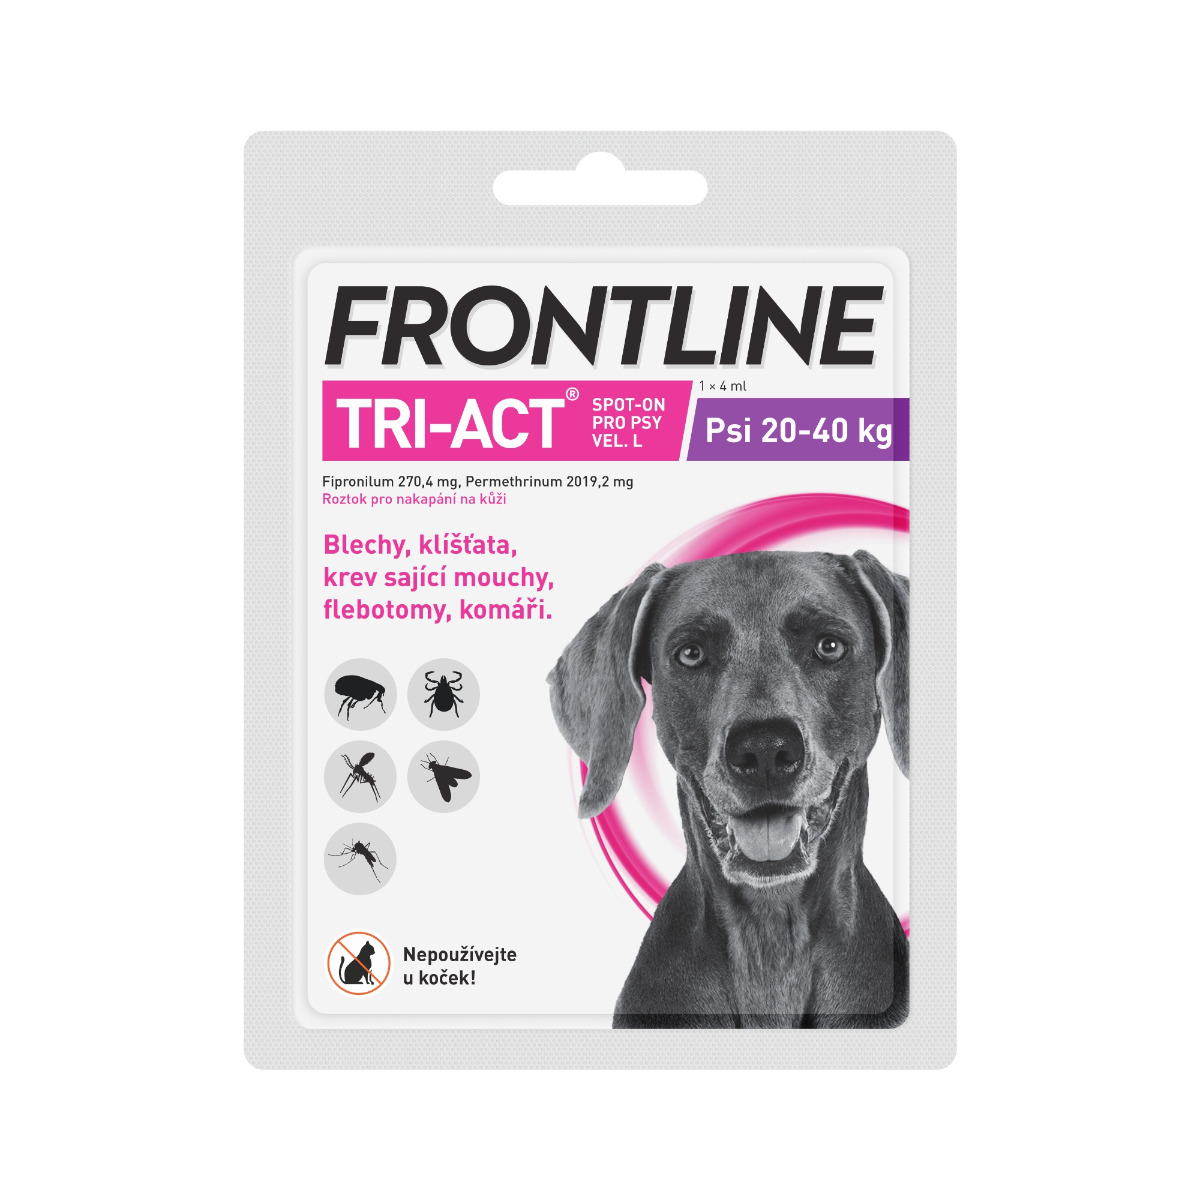 FRONTLINE TRI-ACT pro psy 20-40 kg (L) 1 pipeta FRONTLINE